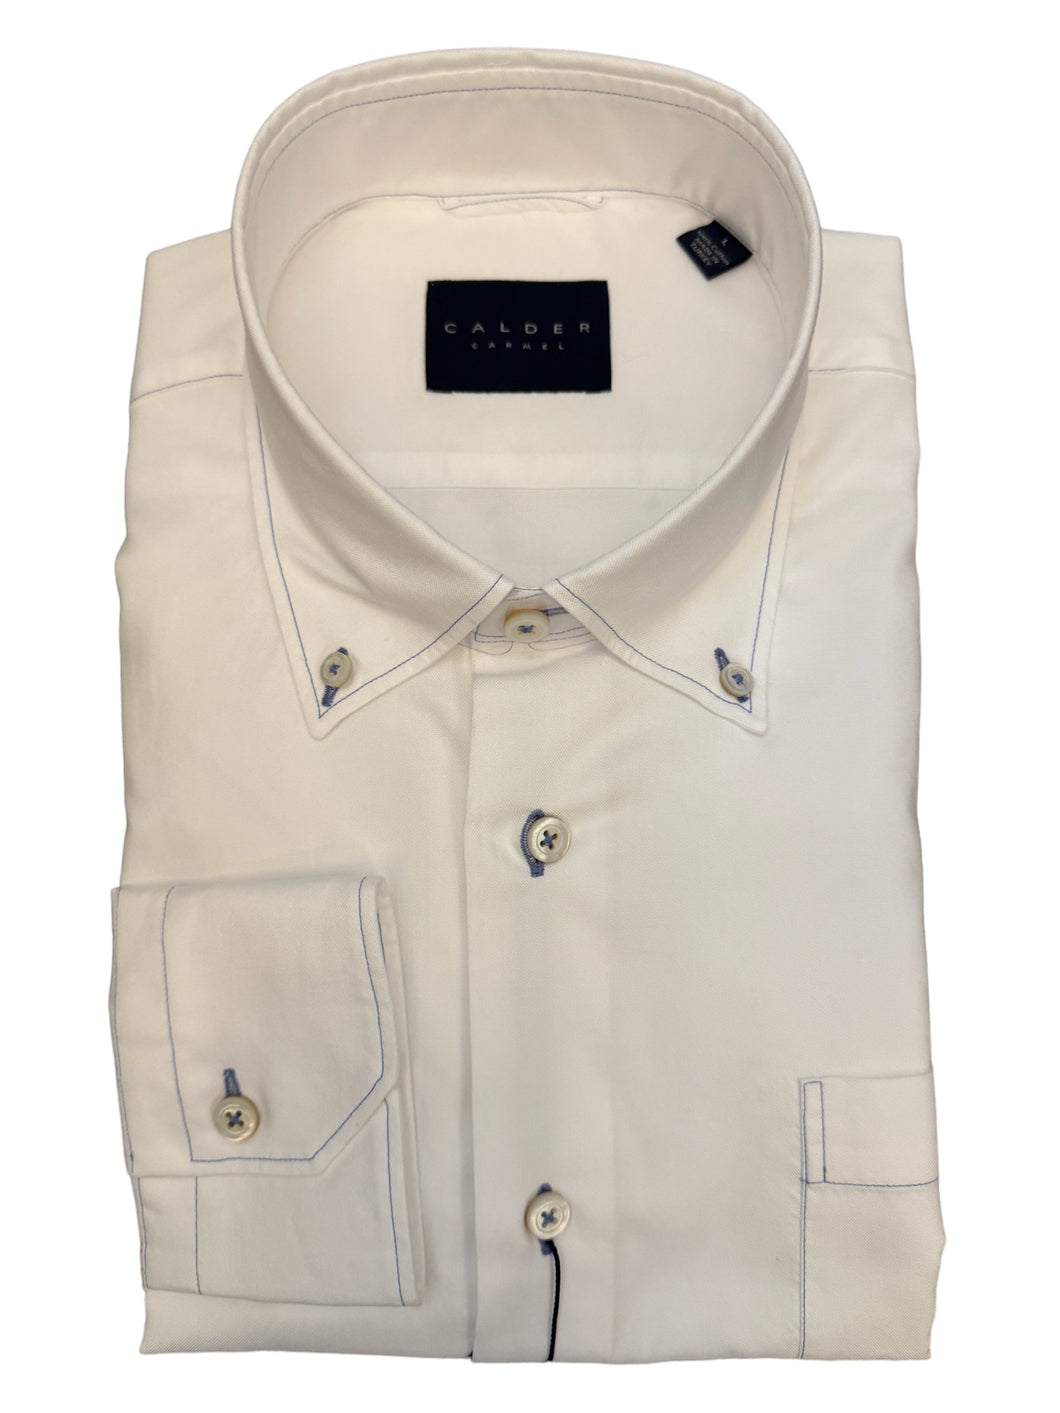 Calder BD Shirt Luxe Oxford White w/Blue Stitch